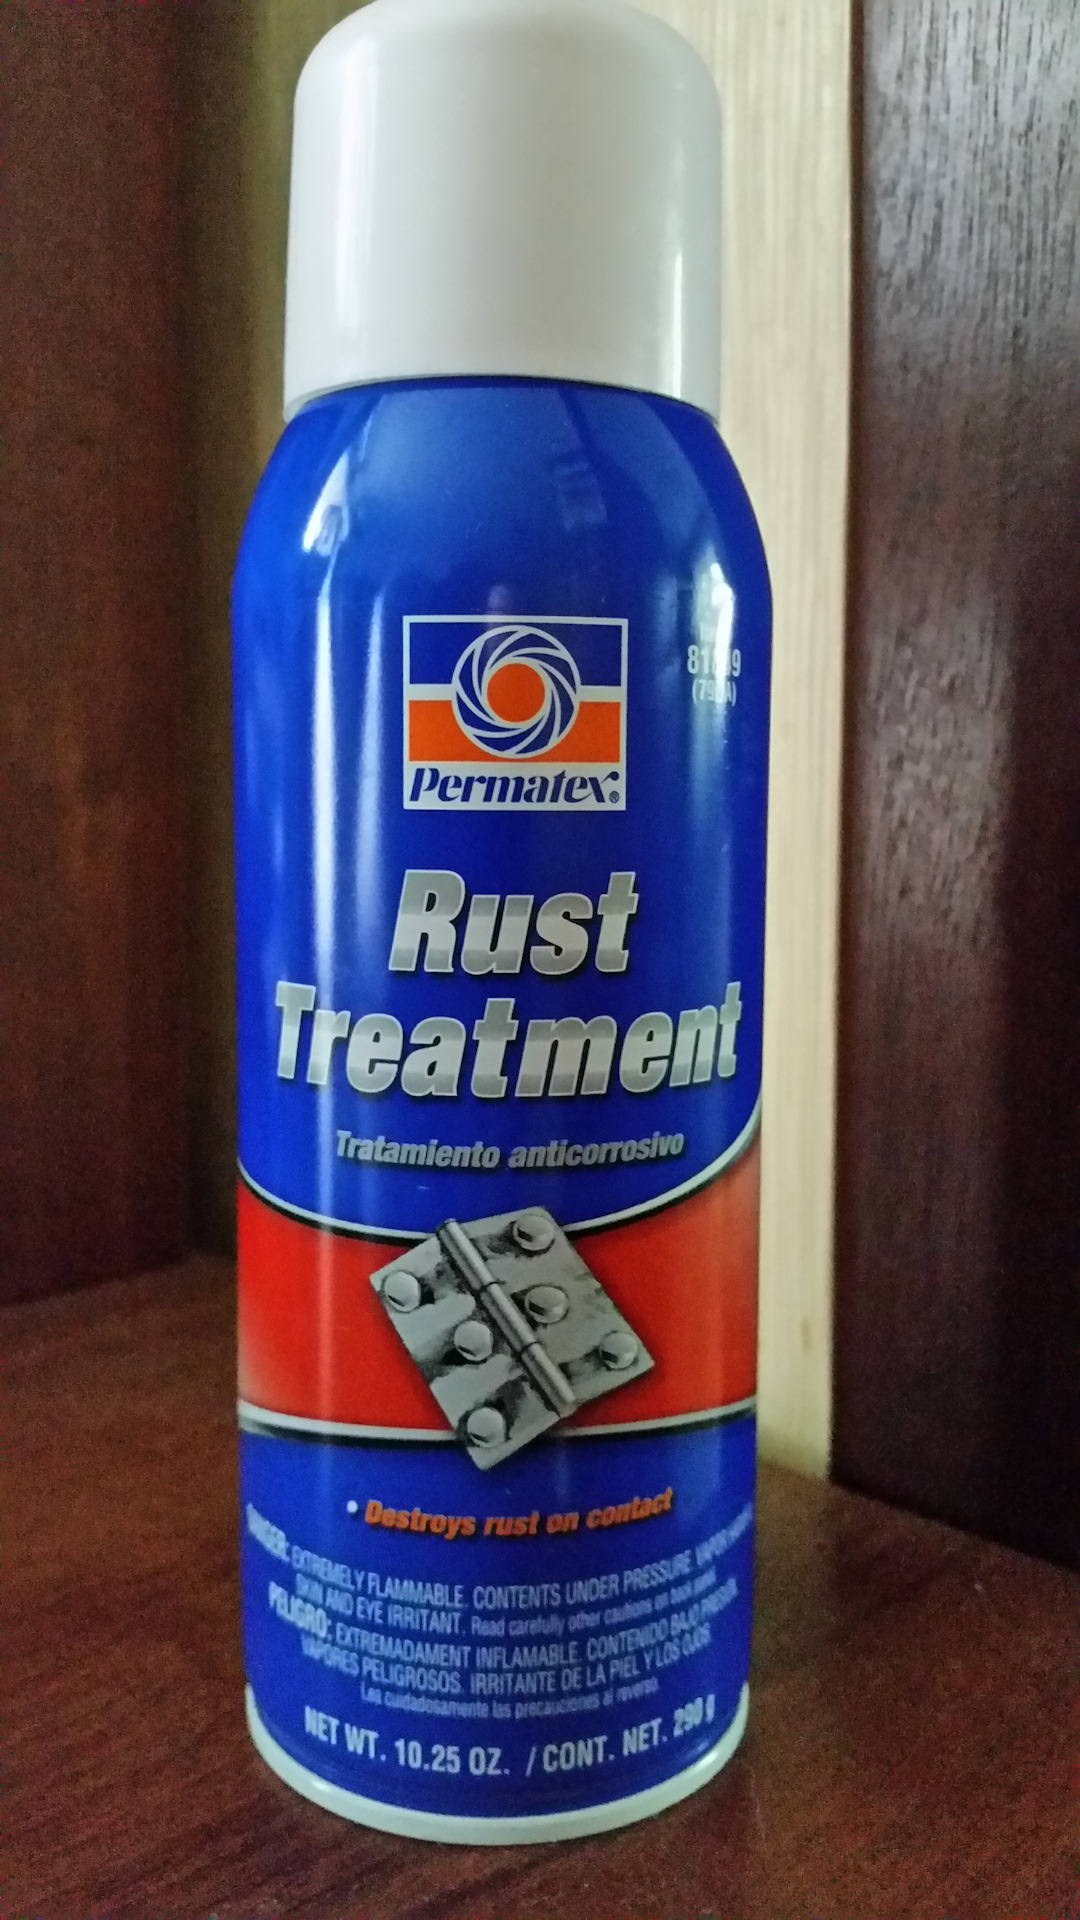 Permatex rust treatment 81775 отзывы фото 11